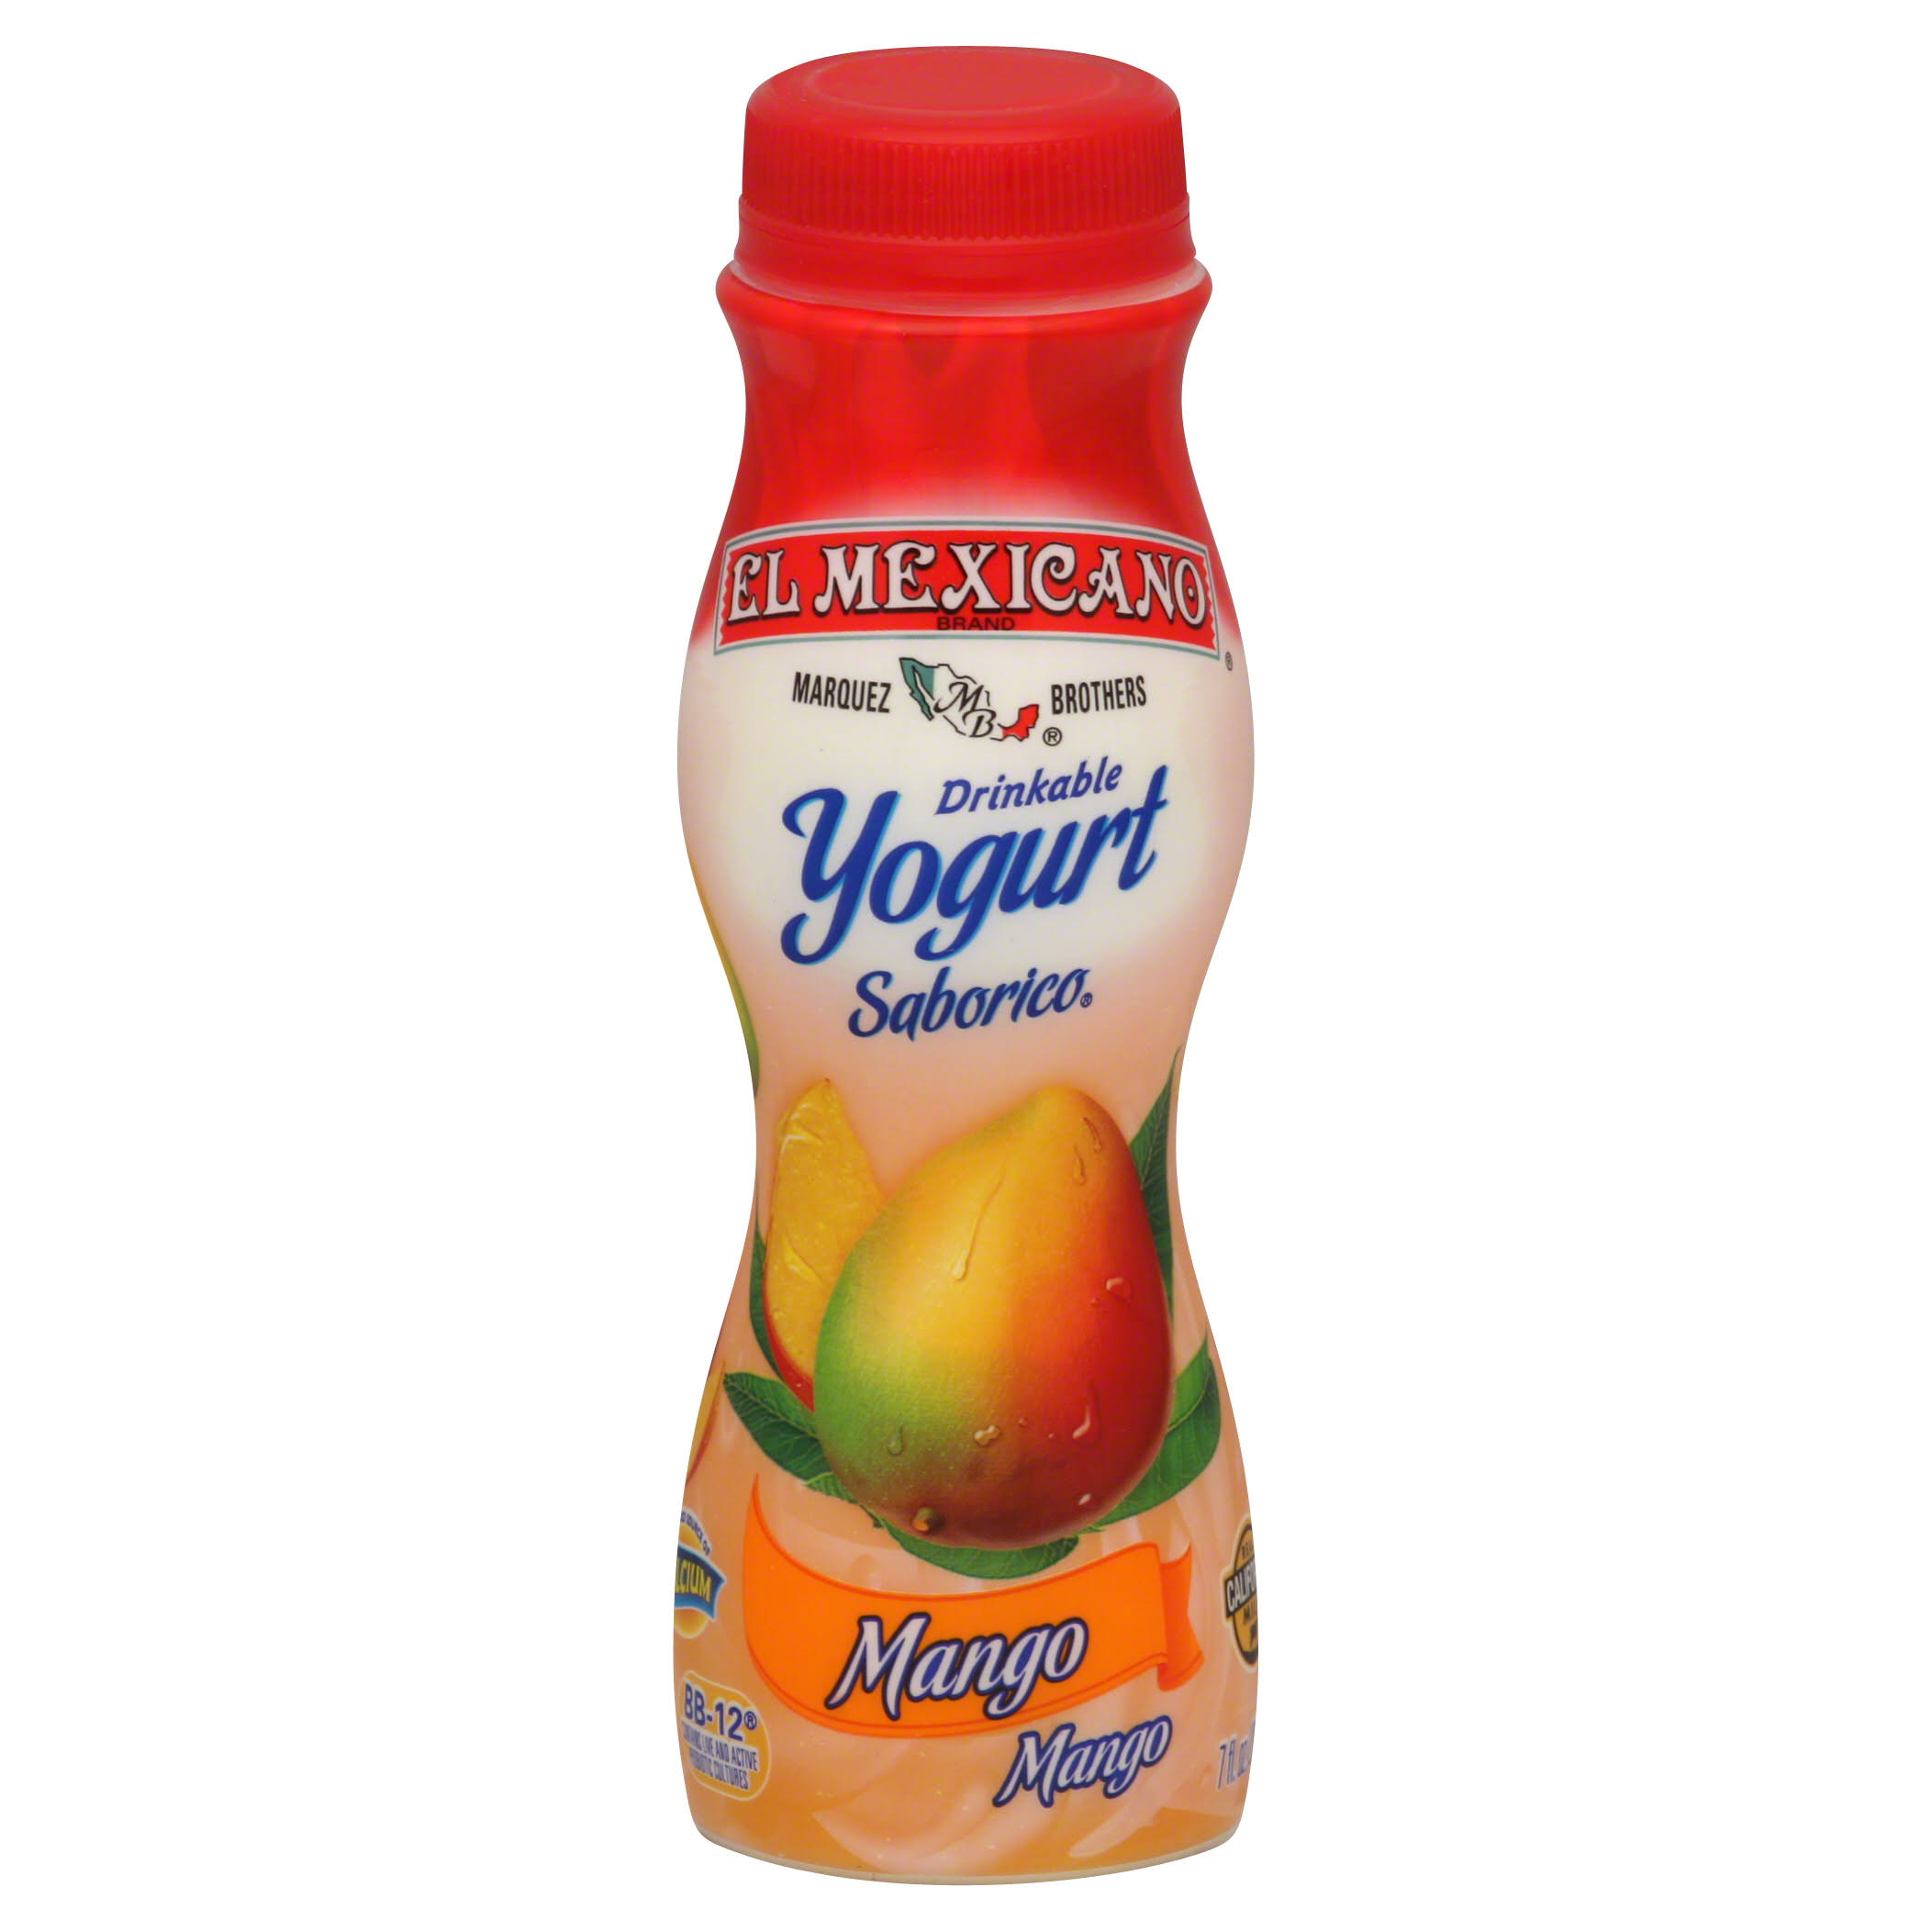 El Mexicano Drinkable Yogurt, Mango - 7 fl oz